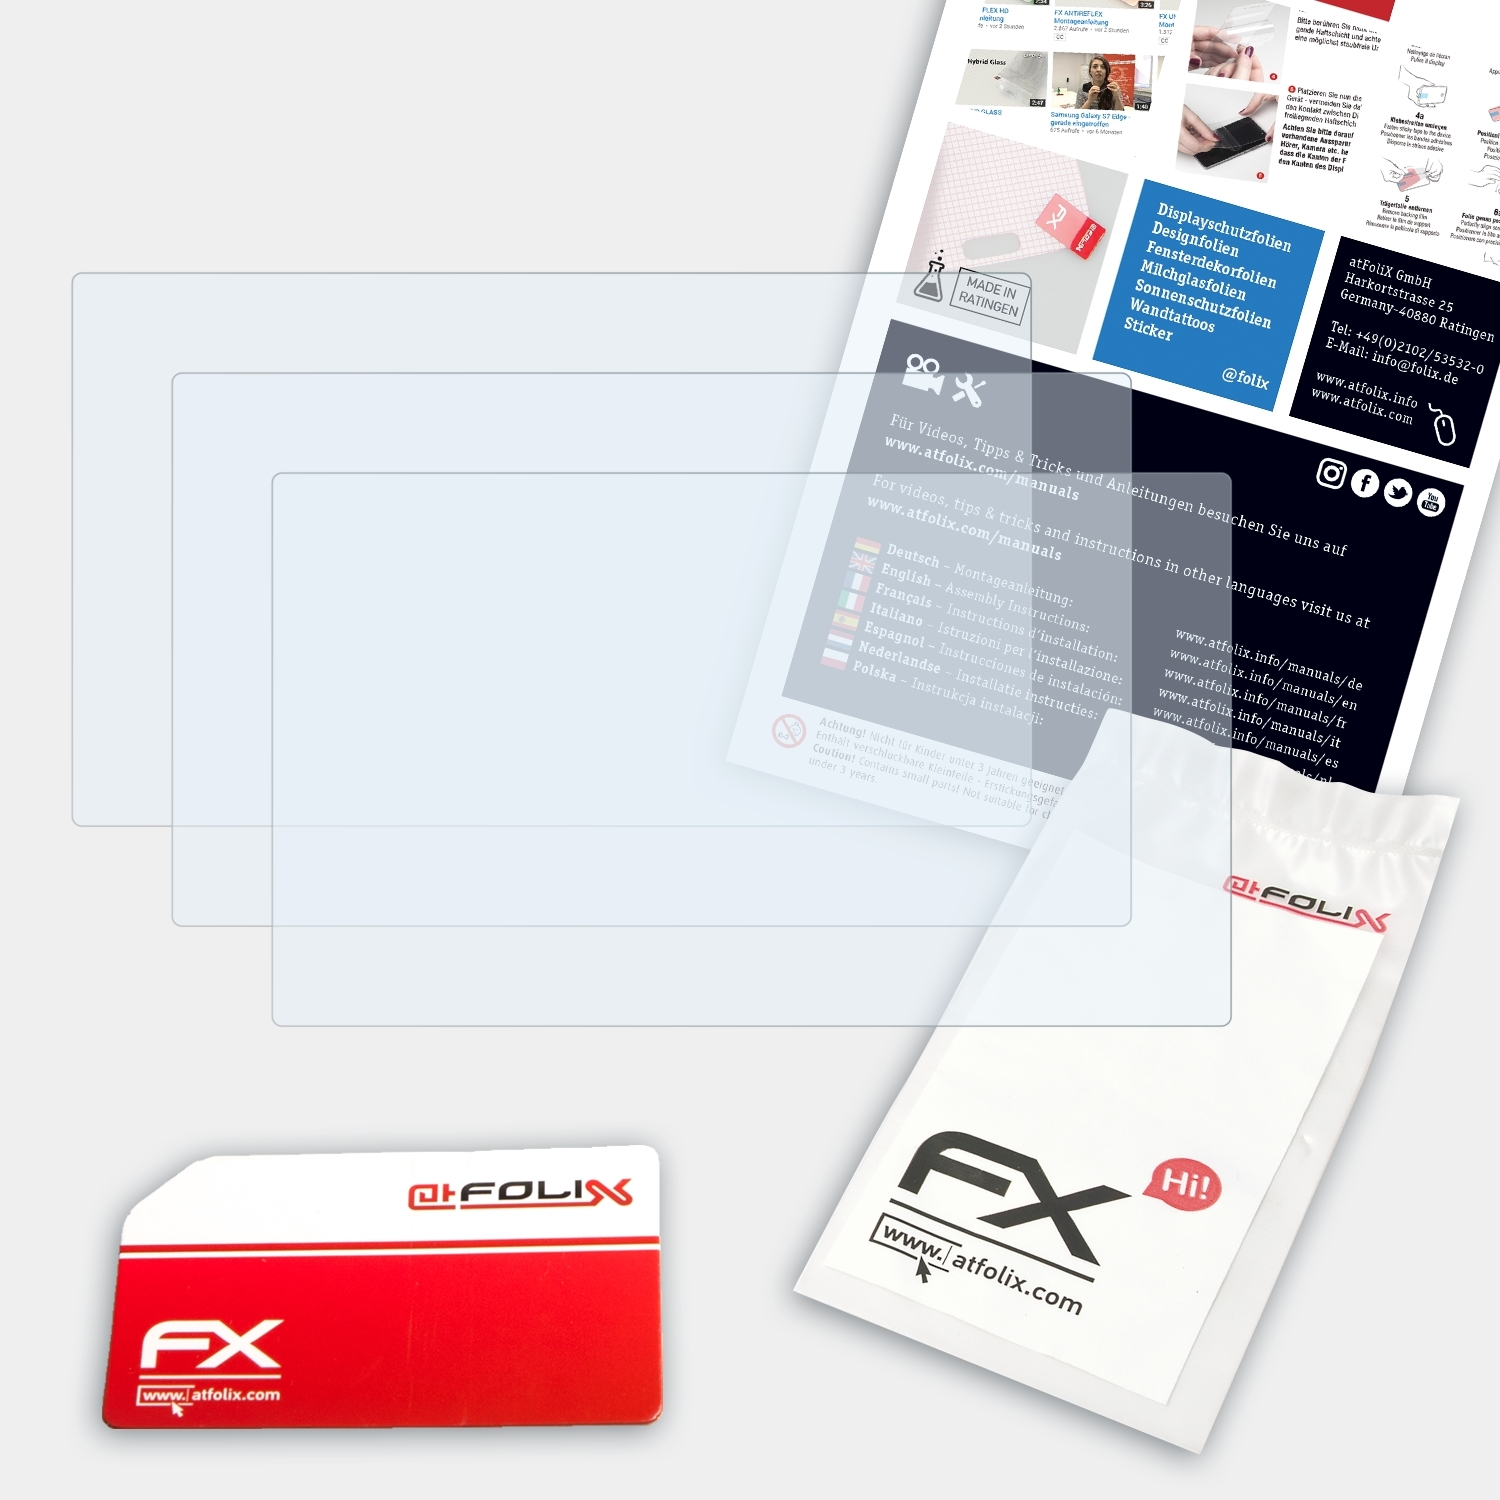 Displayschutz(für 40 Plus) ATFOLIX 3x Navigon FX-Clear